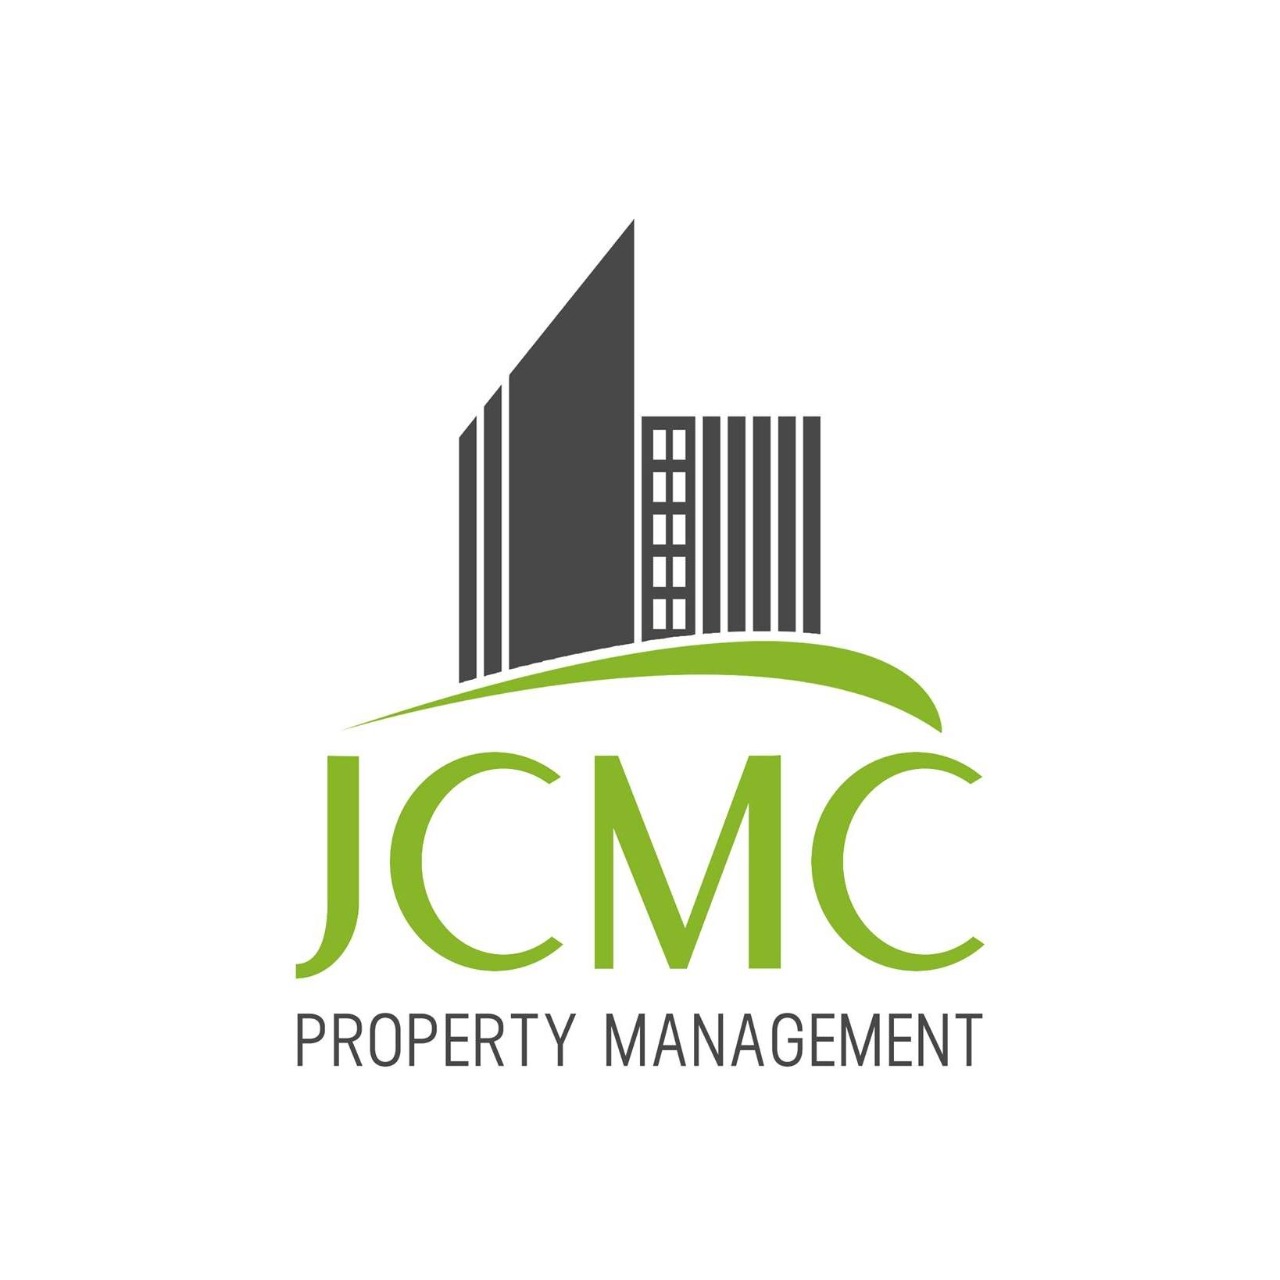 JCMC Property LTD Group